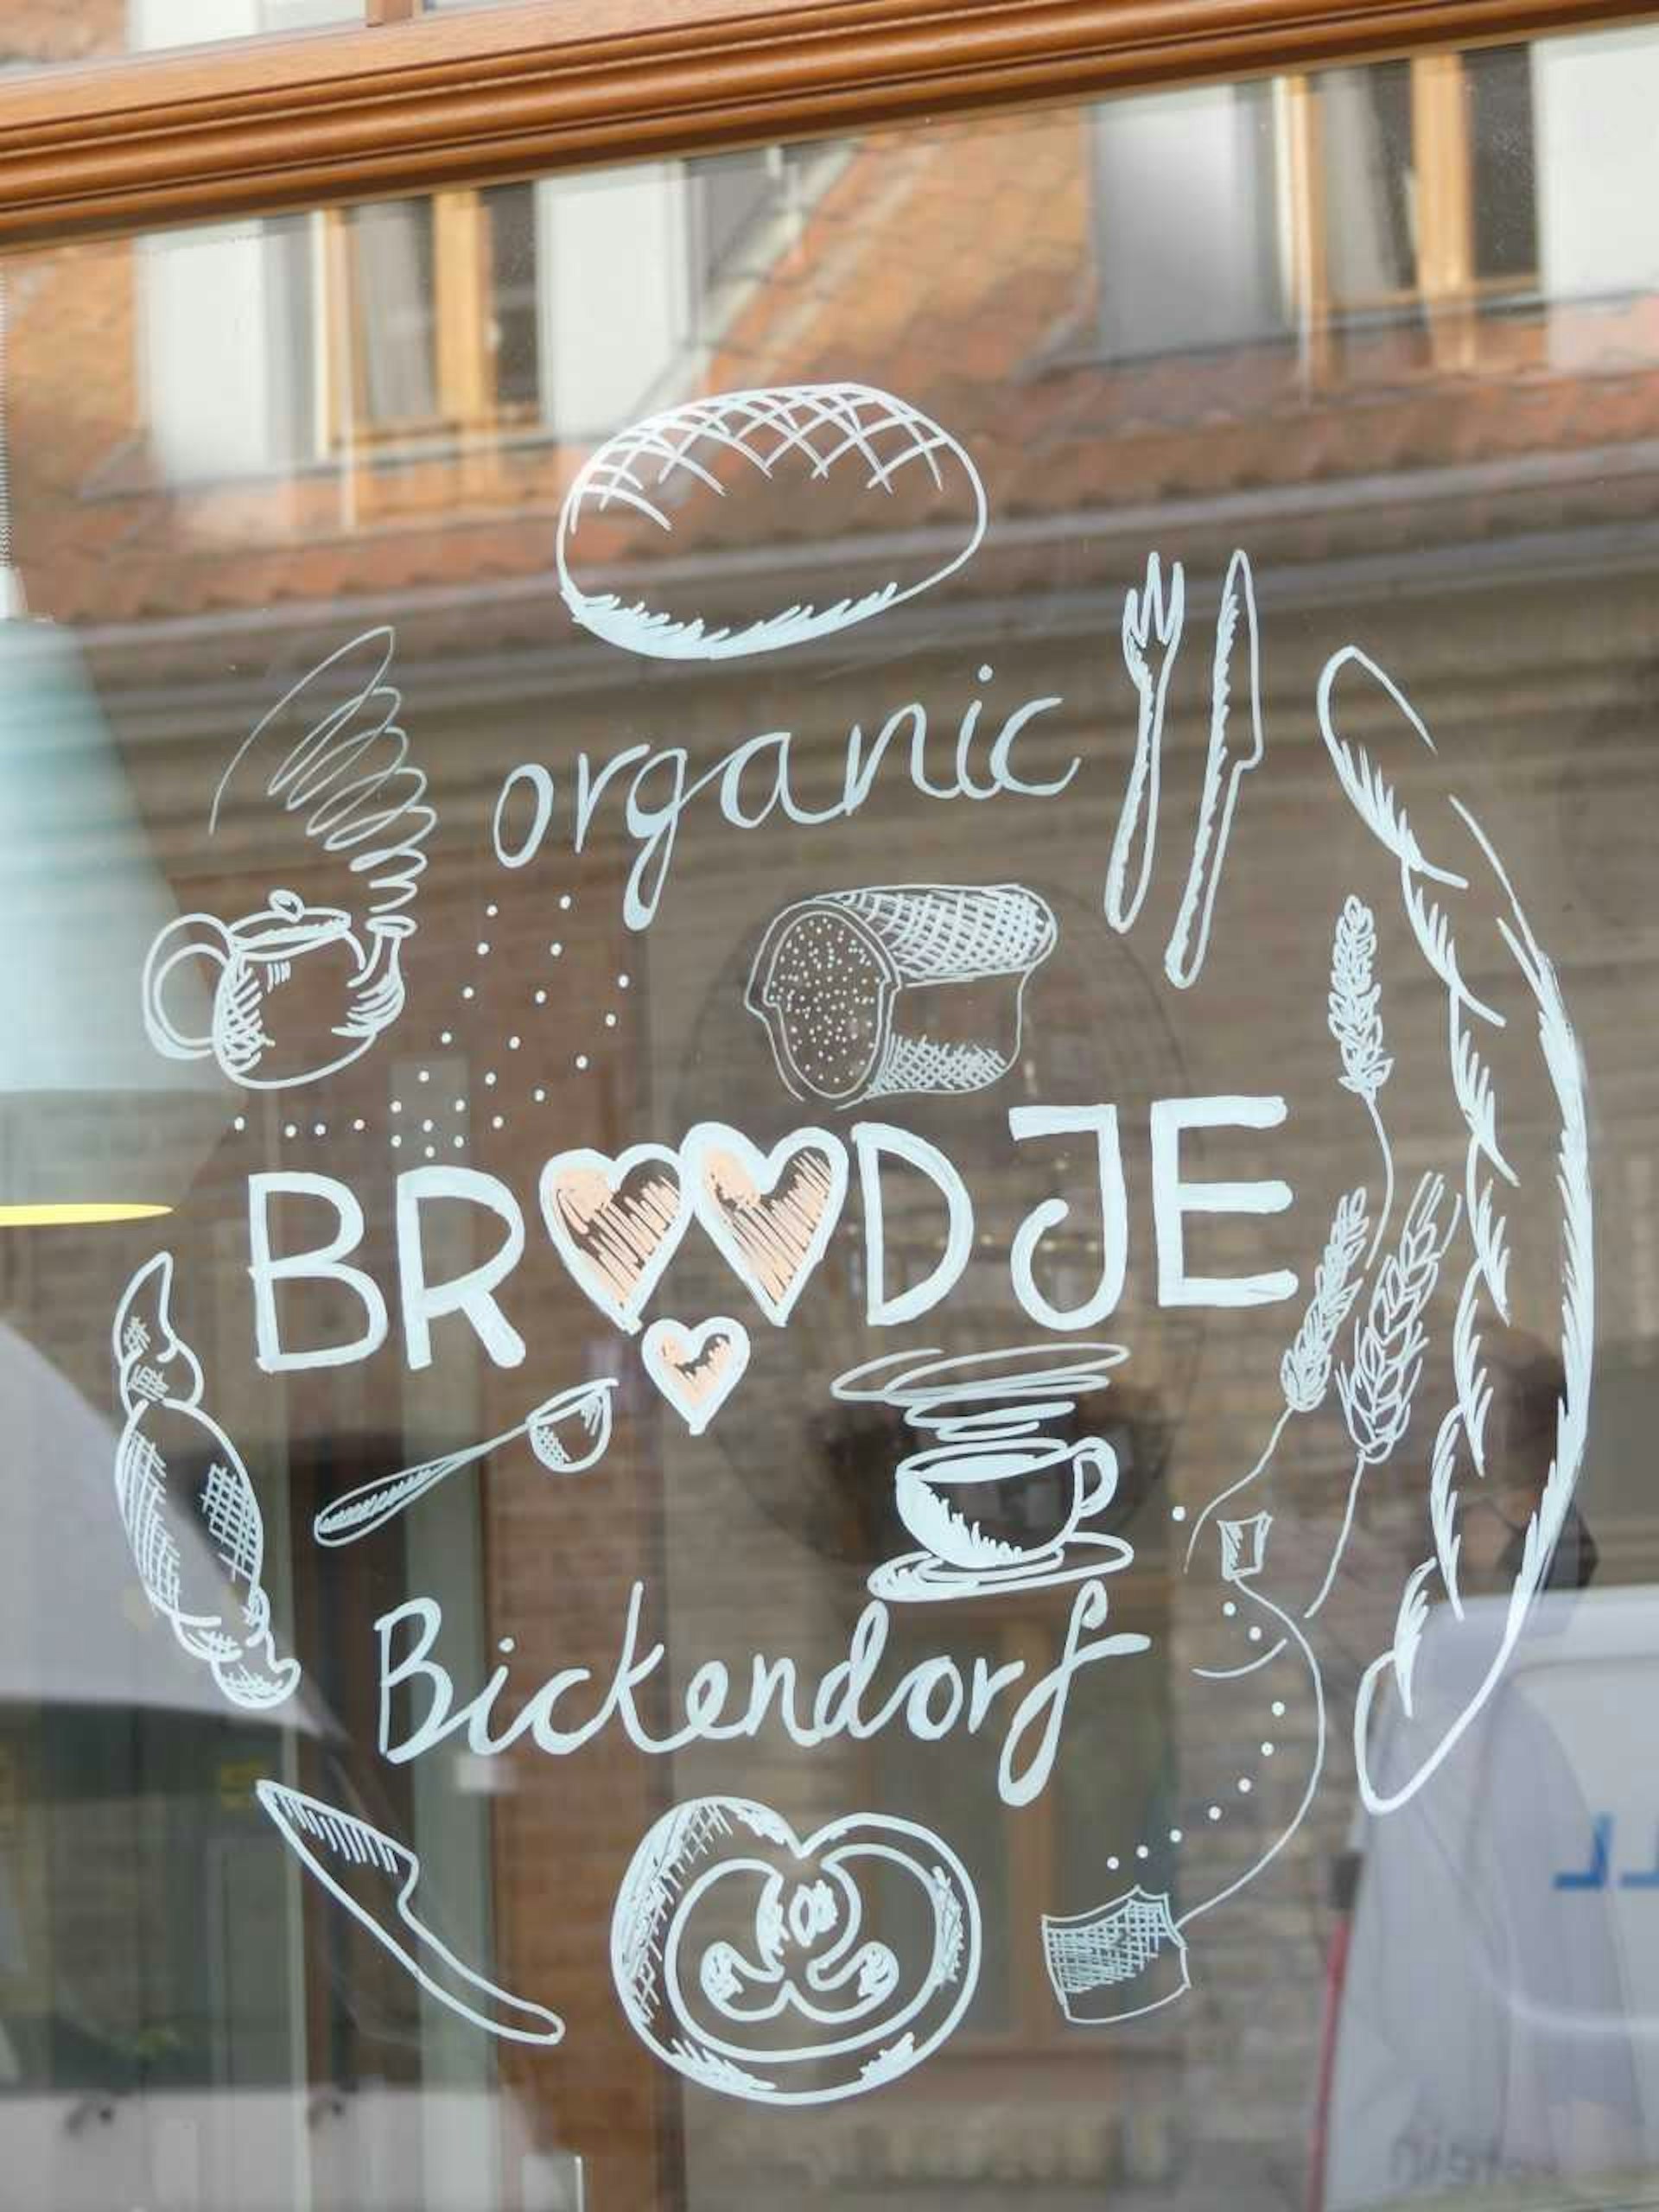 Café Broodje1